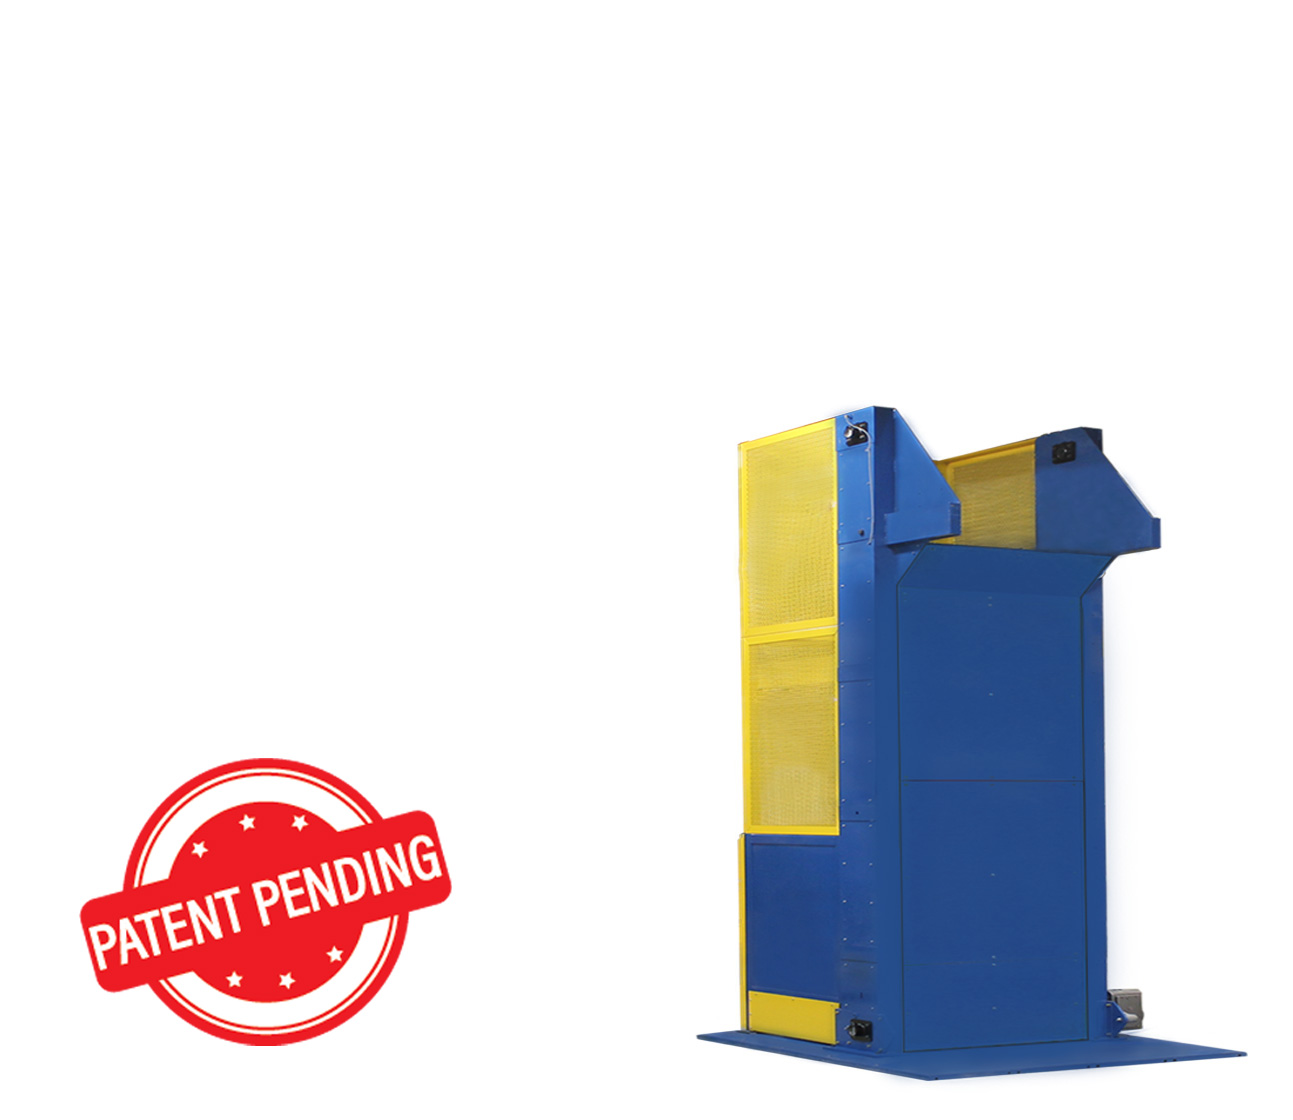 Endura-Veyor, Inc.'s patent pending Optimizer Container Dumper